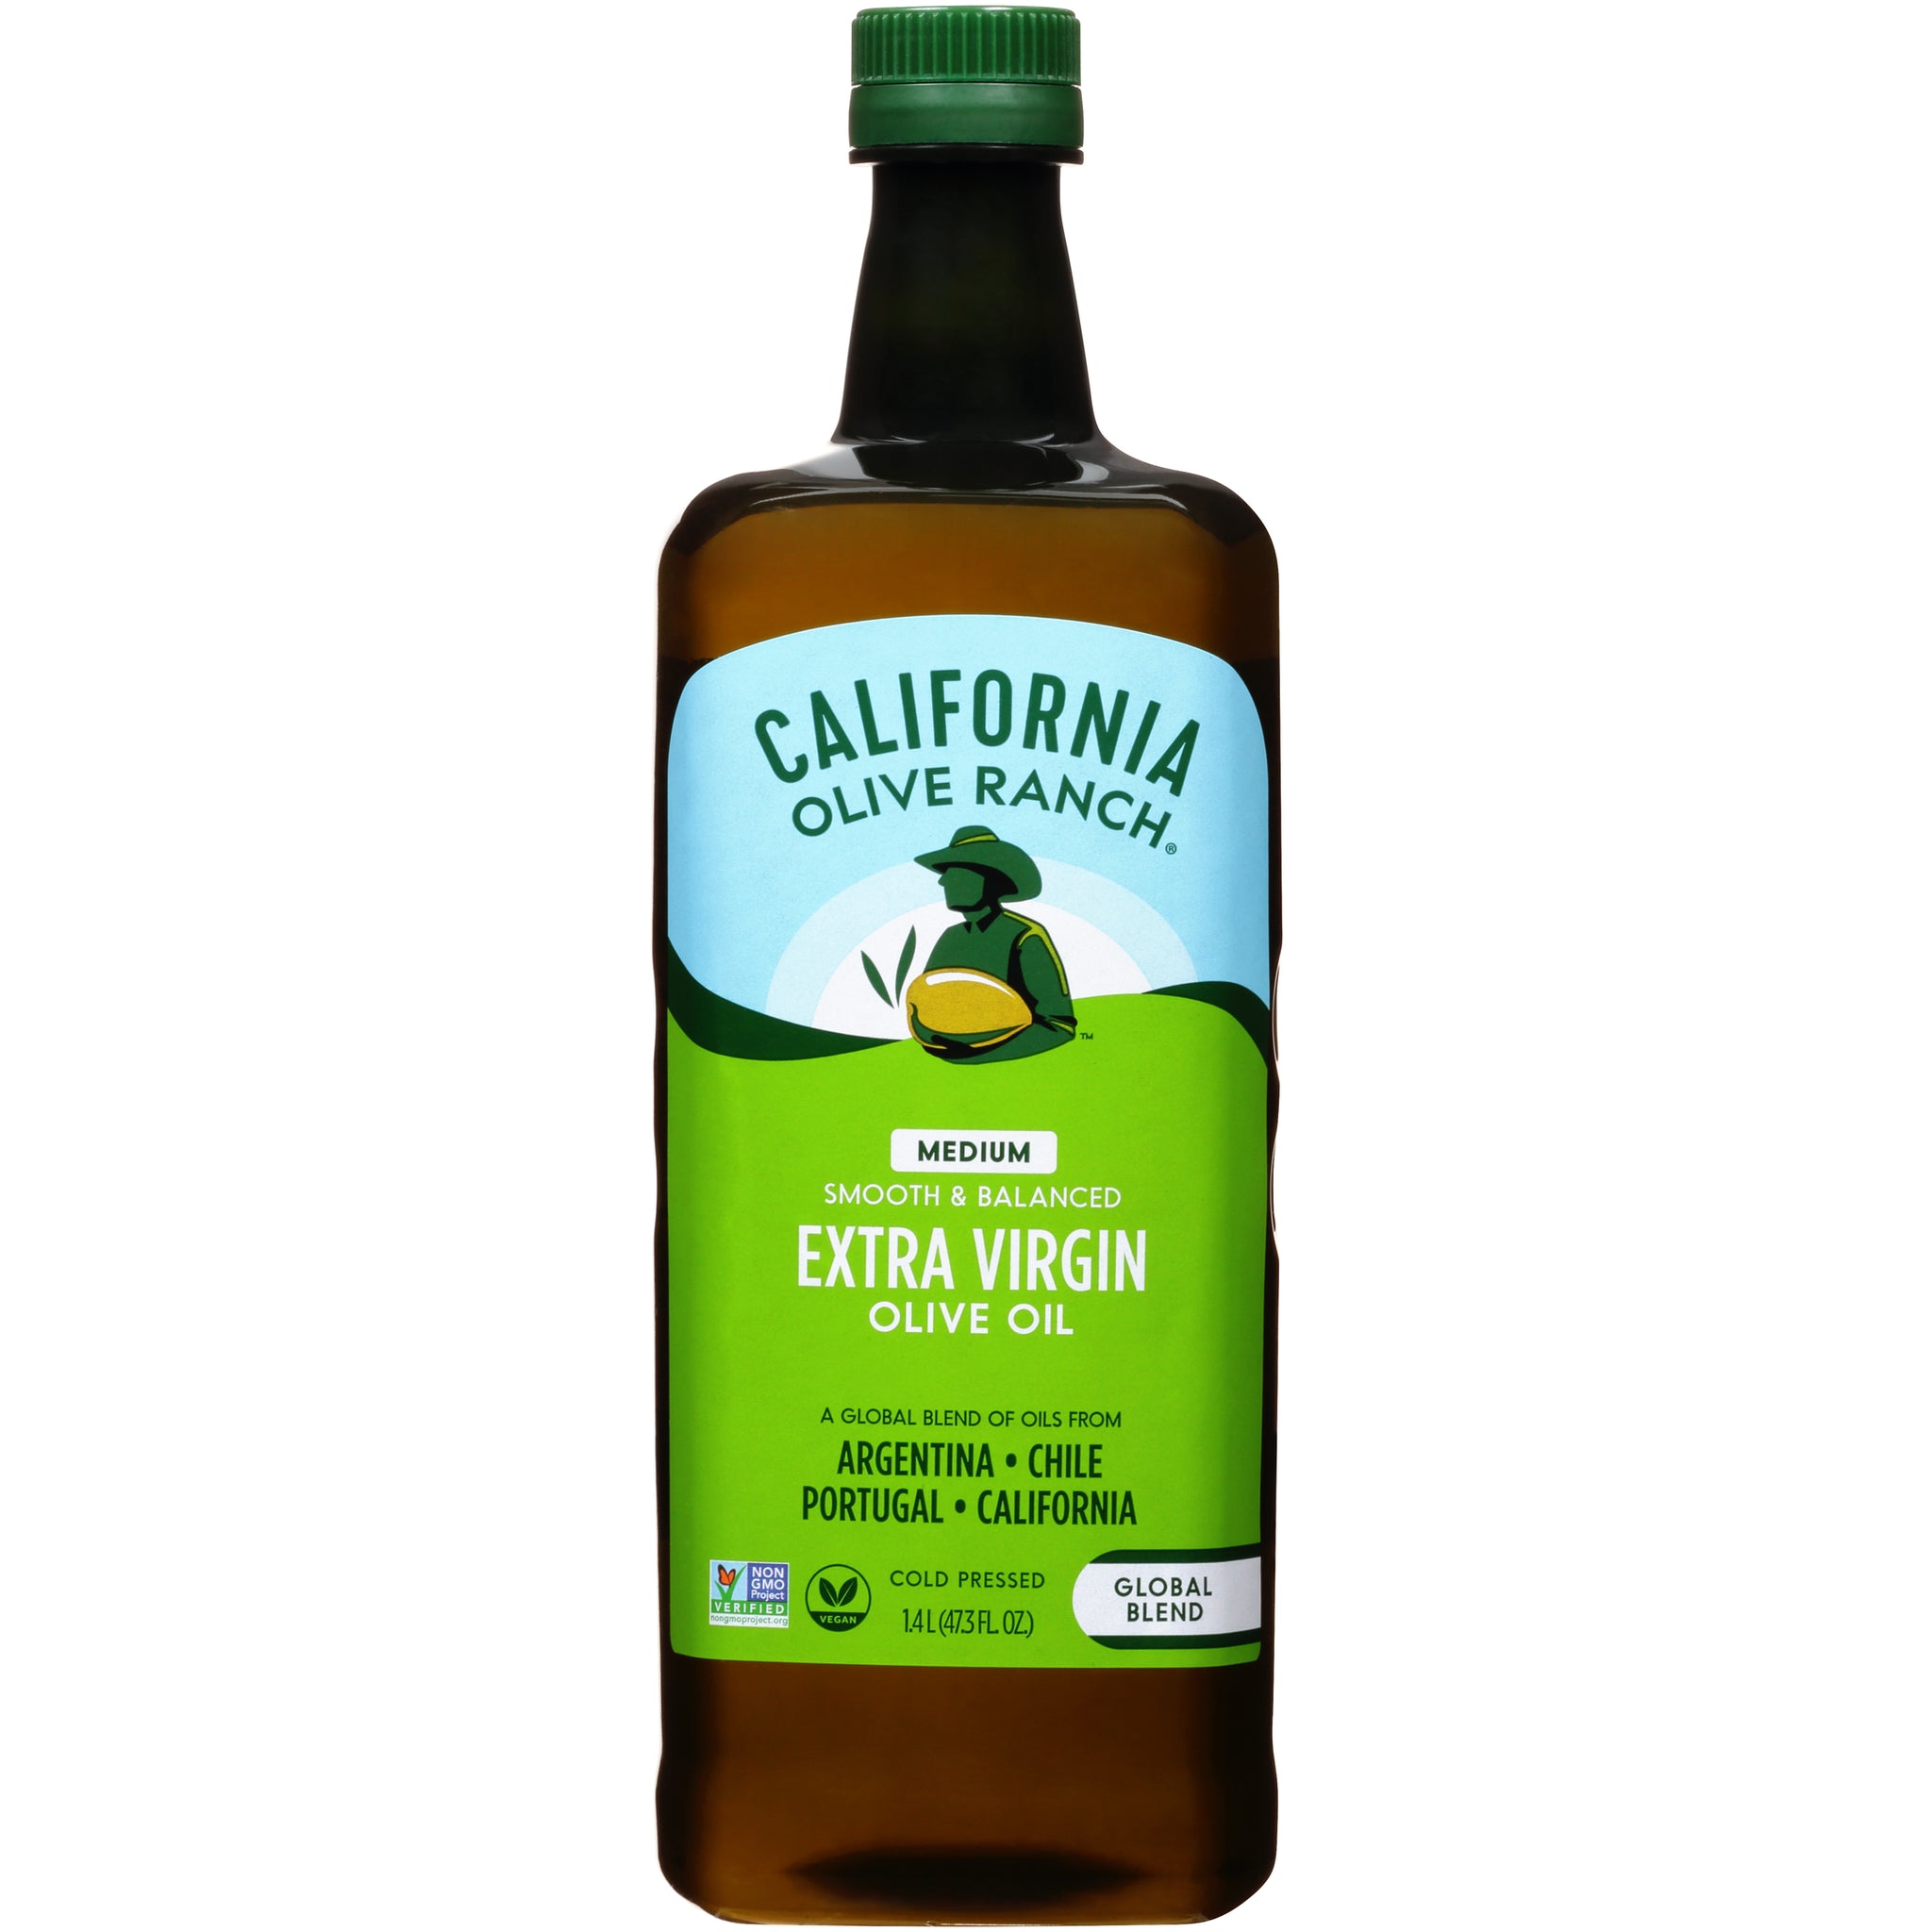 California Olive Ranch Medium Smooth & Balanced Extra Virgin Olive Oil